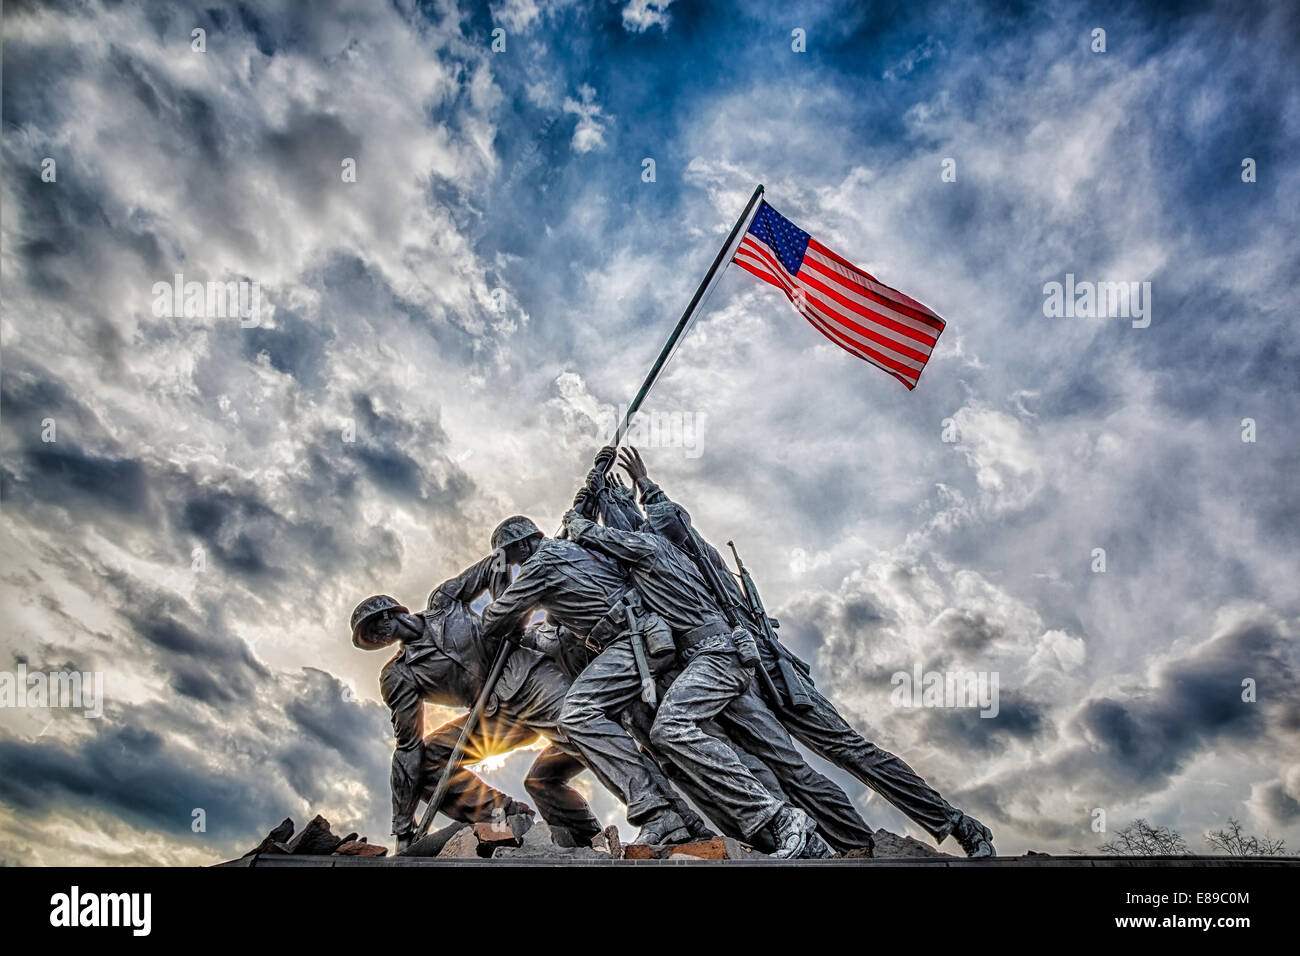 Iwo jima flag raising hi-res stock photography and images - Alamy